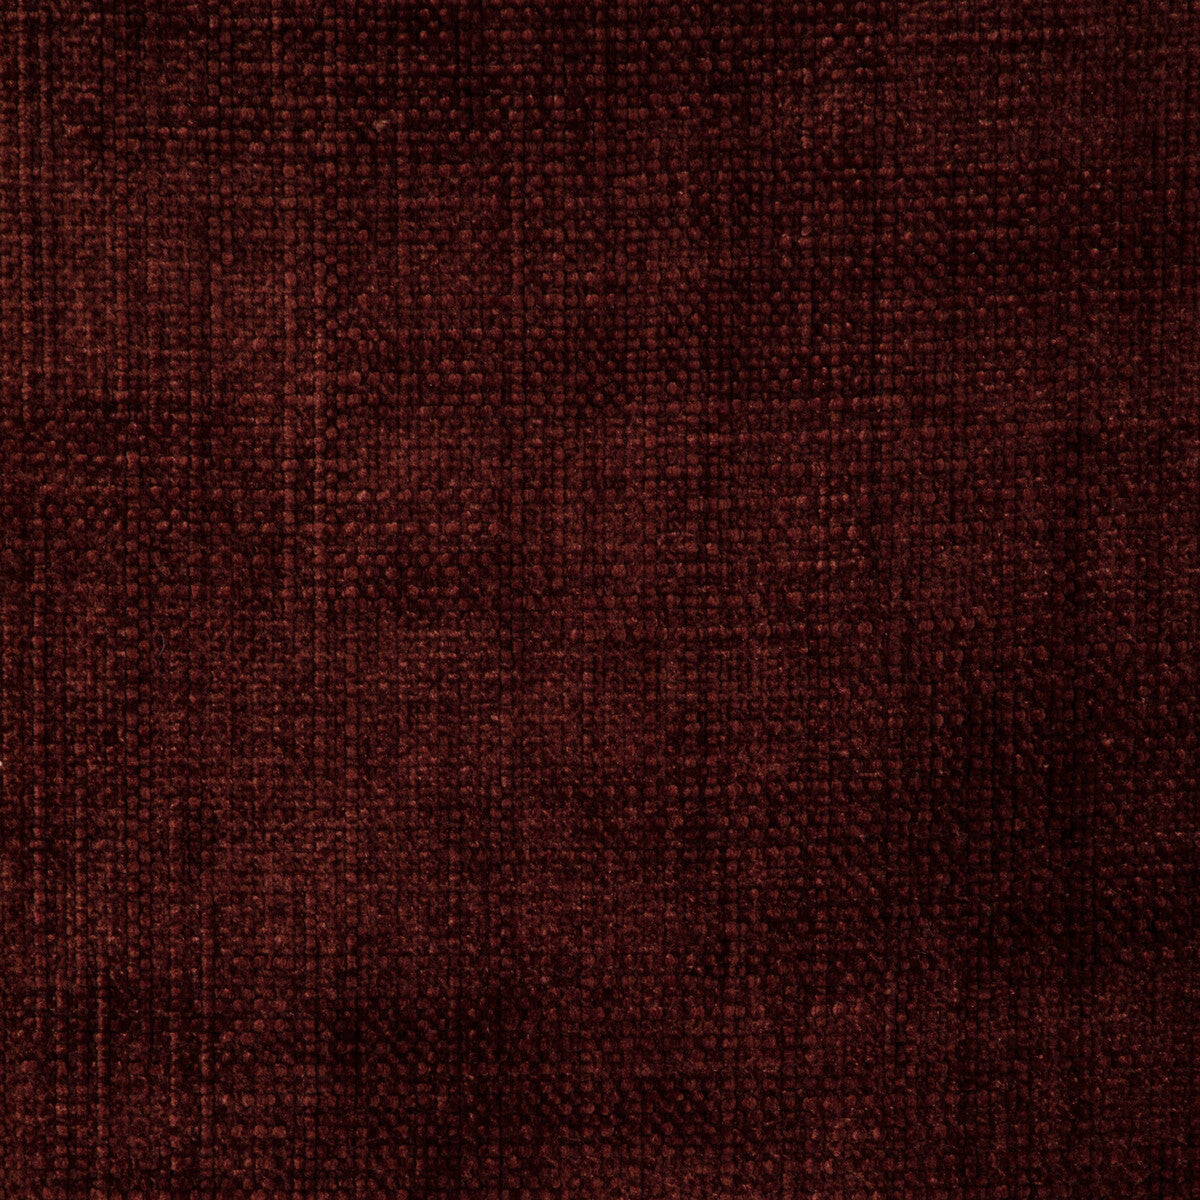 Kravet Smart fabric in 36991-9 color - pattern 36991.9.0 - by Kravet Smart in the Performance Kravetarmor collection